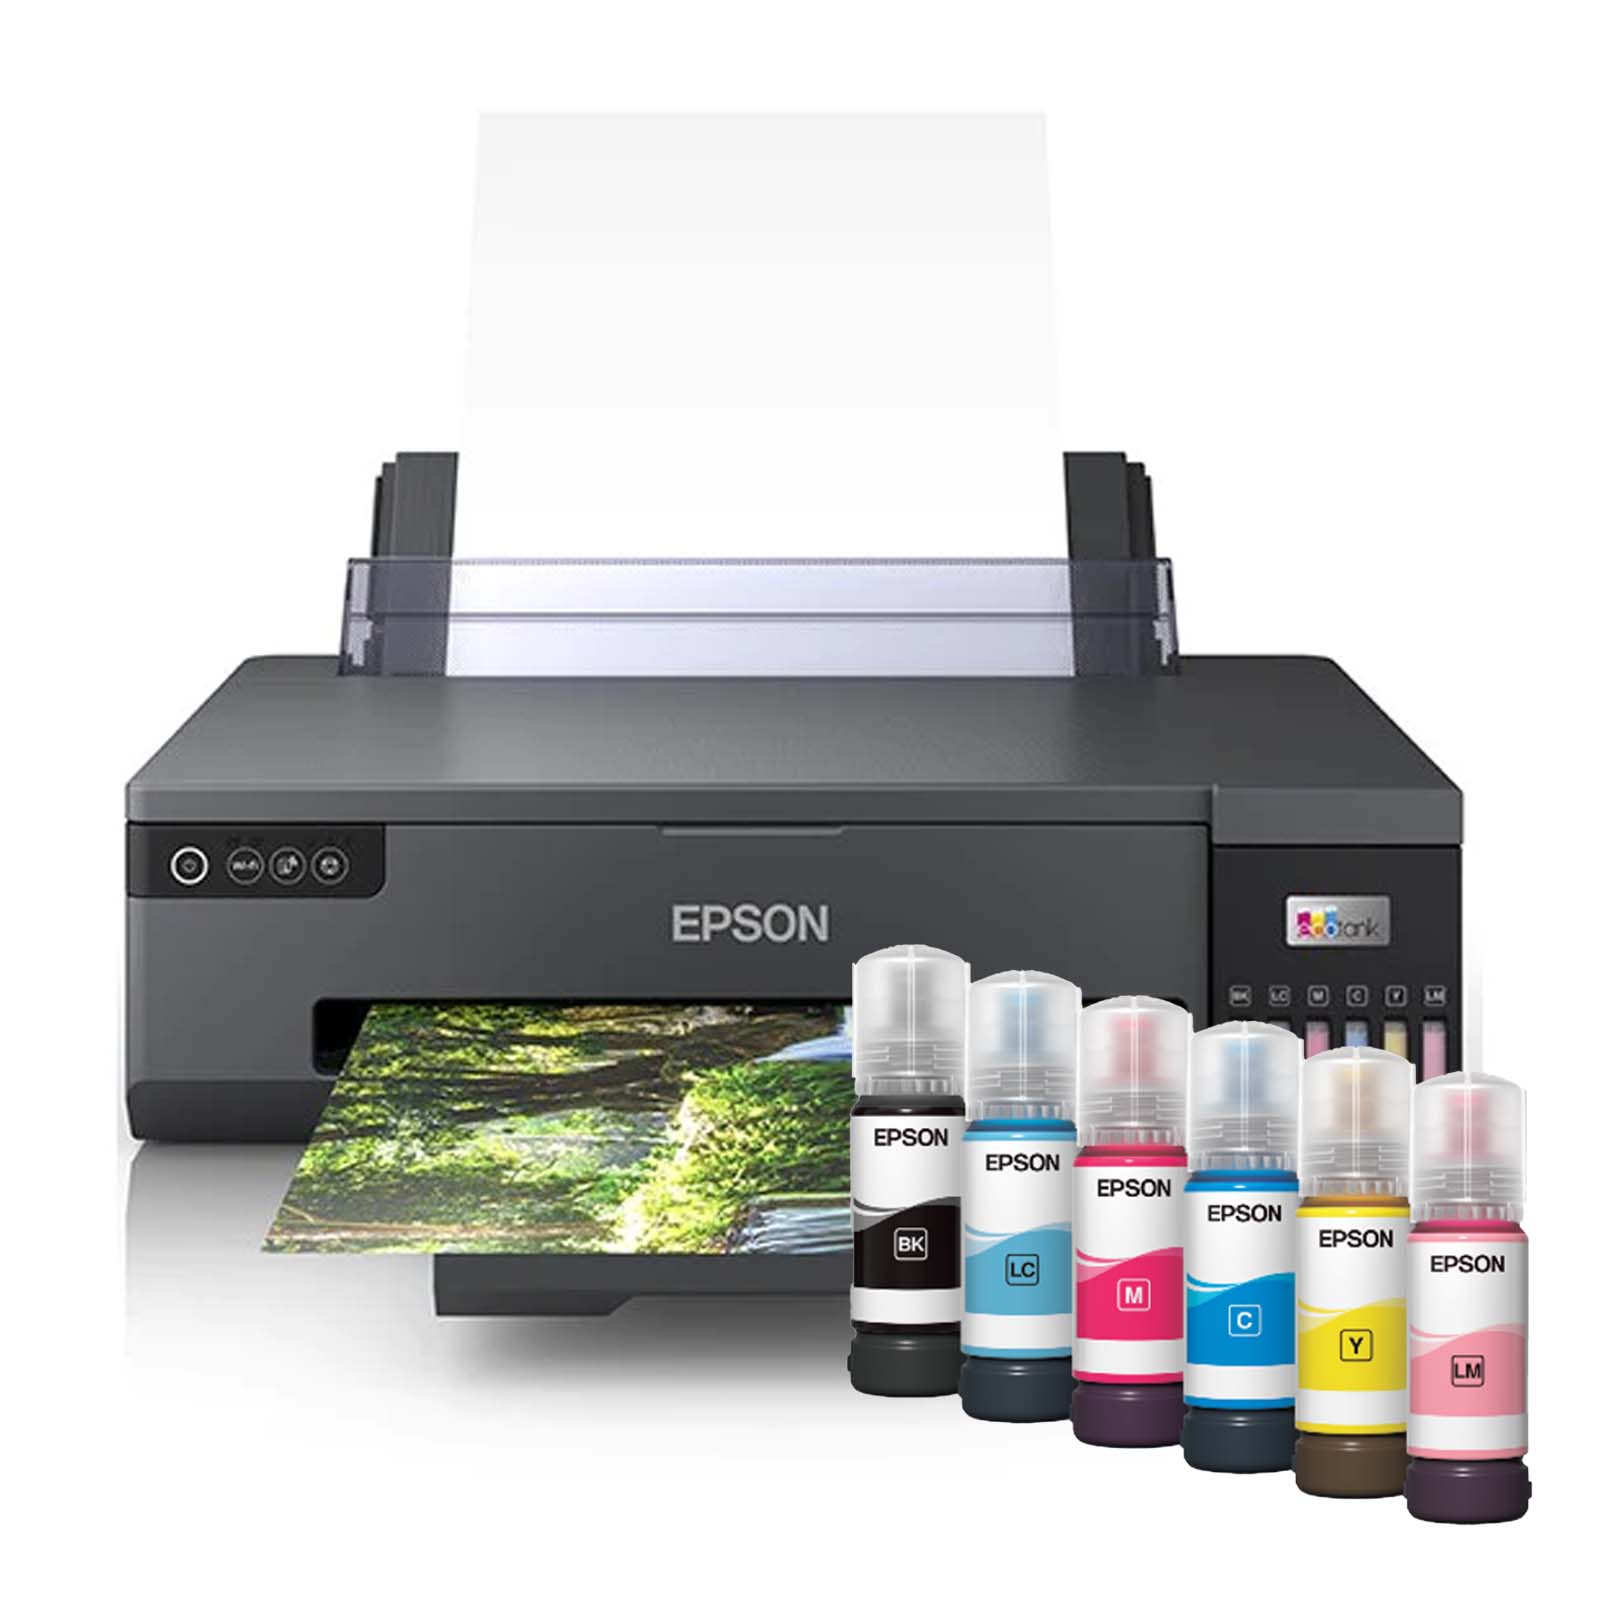 Image of Epson EcoTank ET18100 AIO A3 and Photo Printer 6 Ink